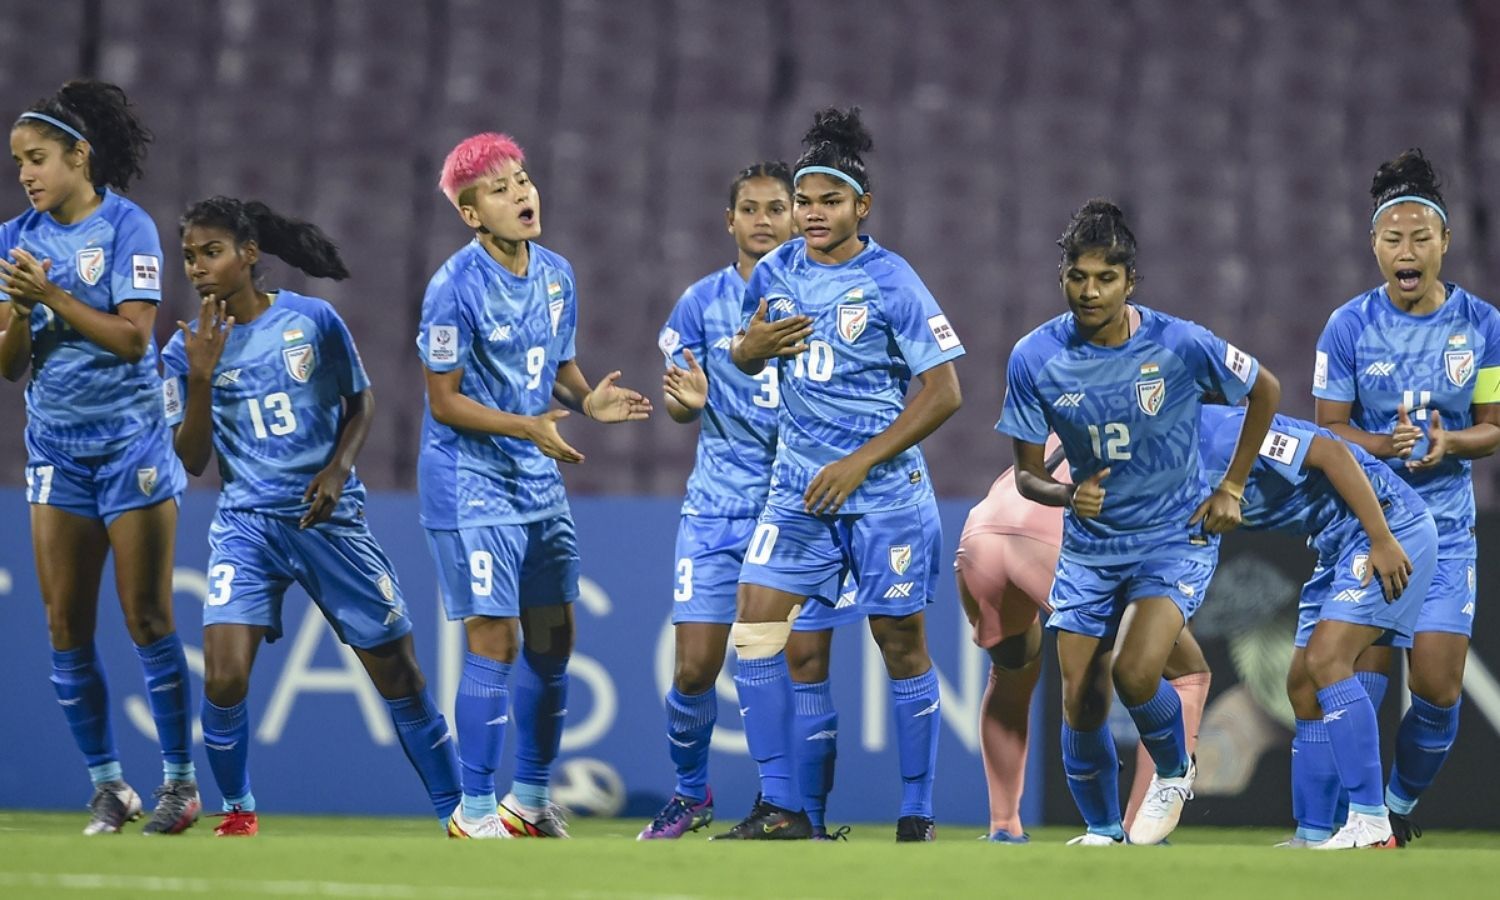 Indian senior women's football team to play two friendlies against Uzbekistan